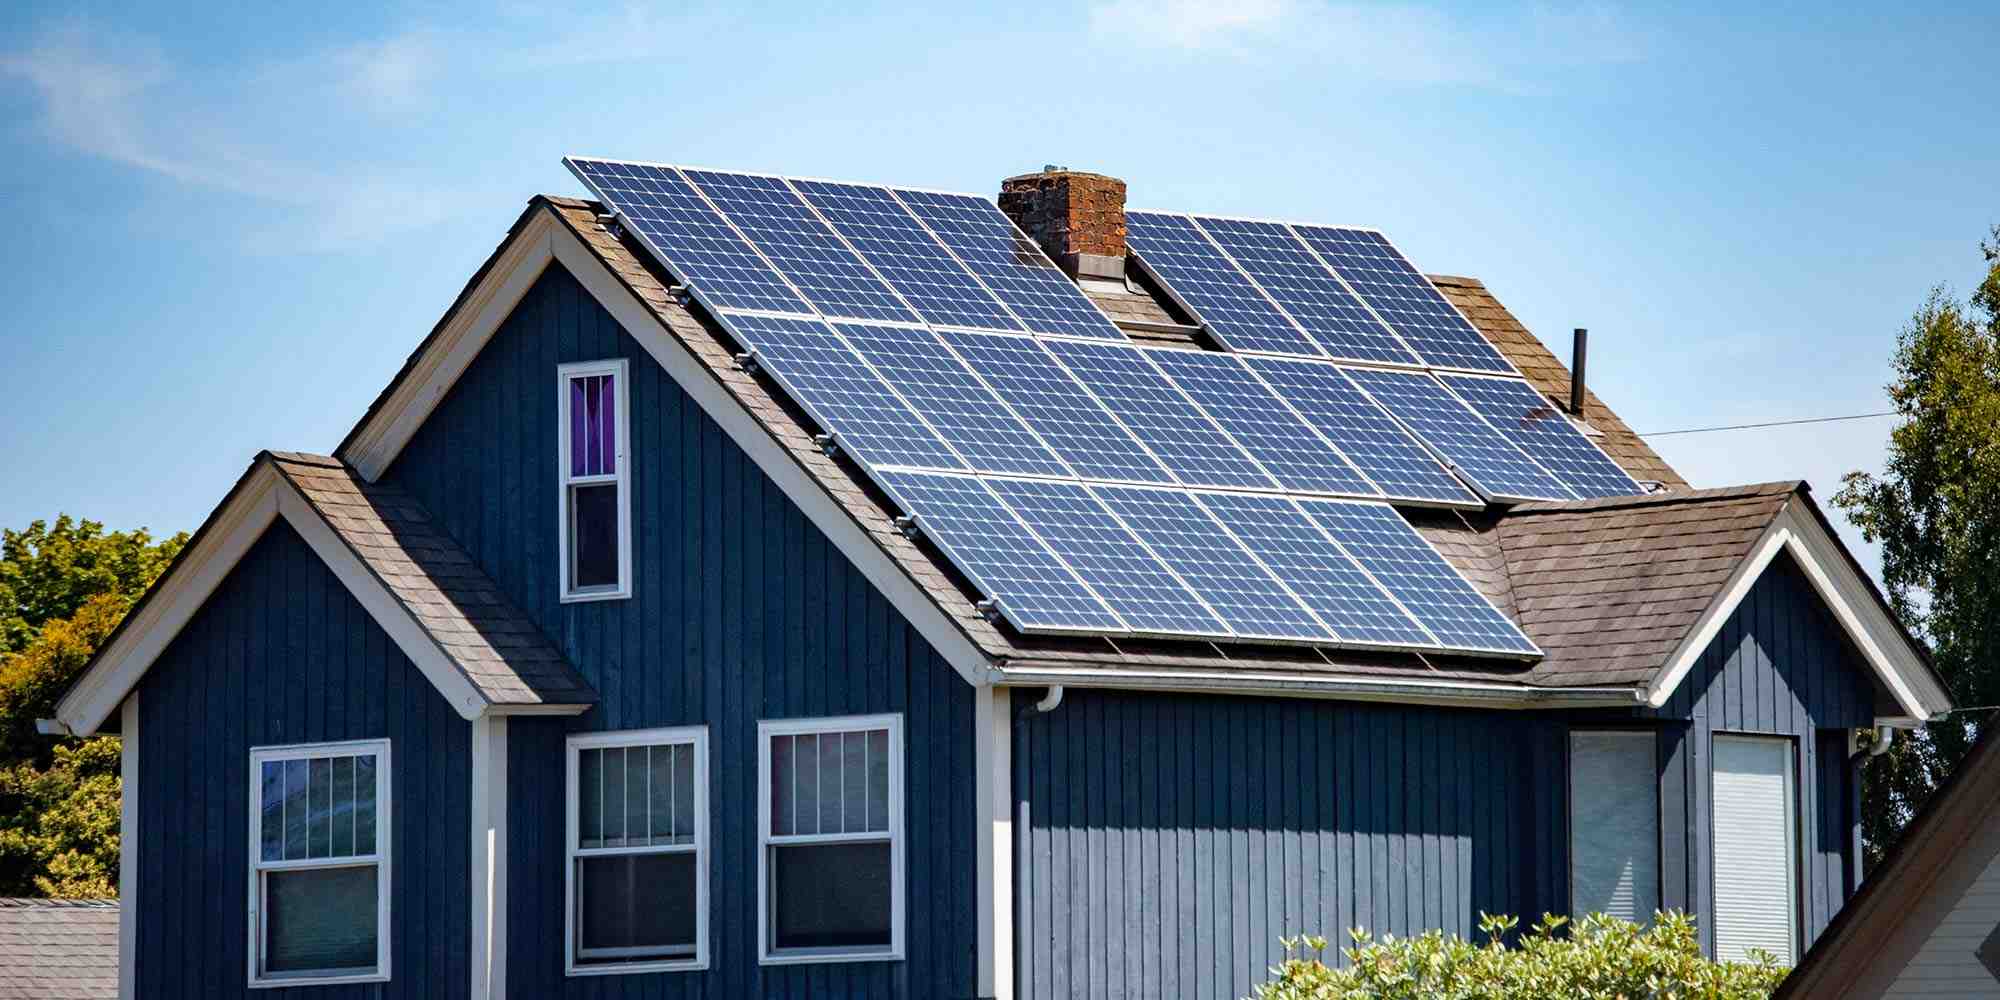 Is solar energy eco friendly?